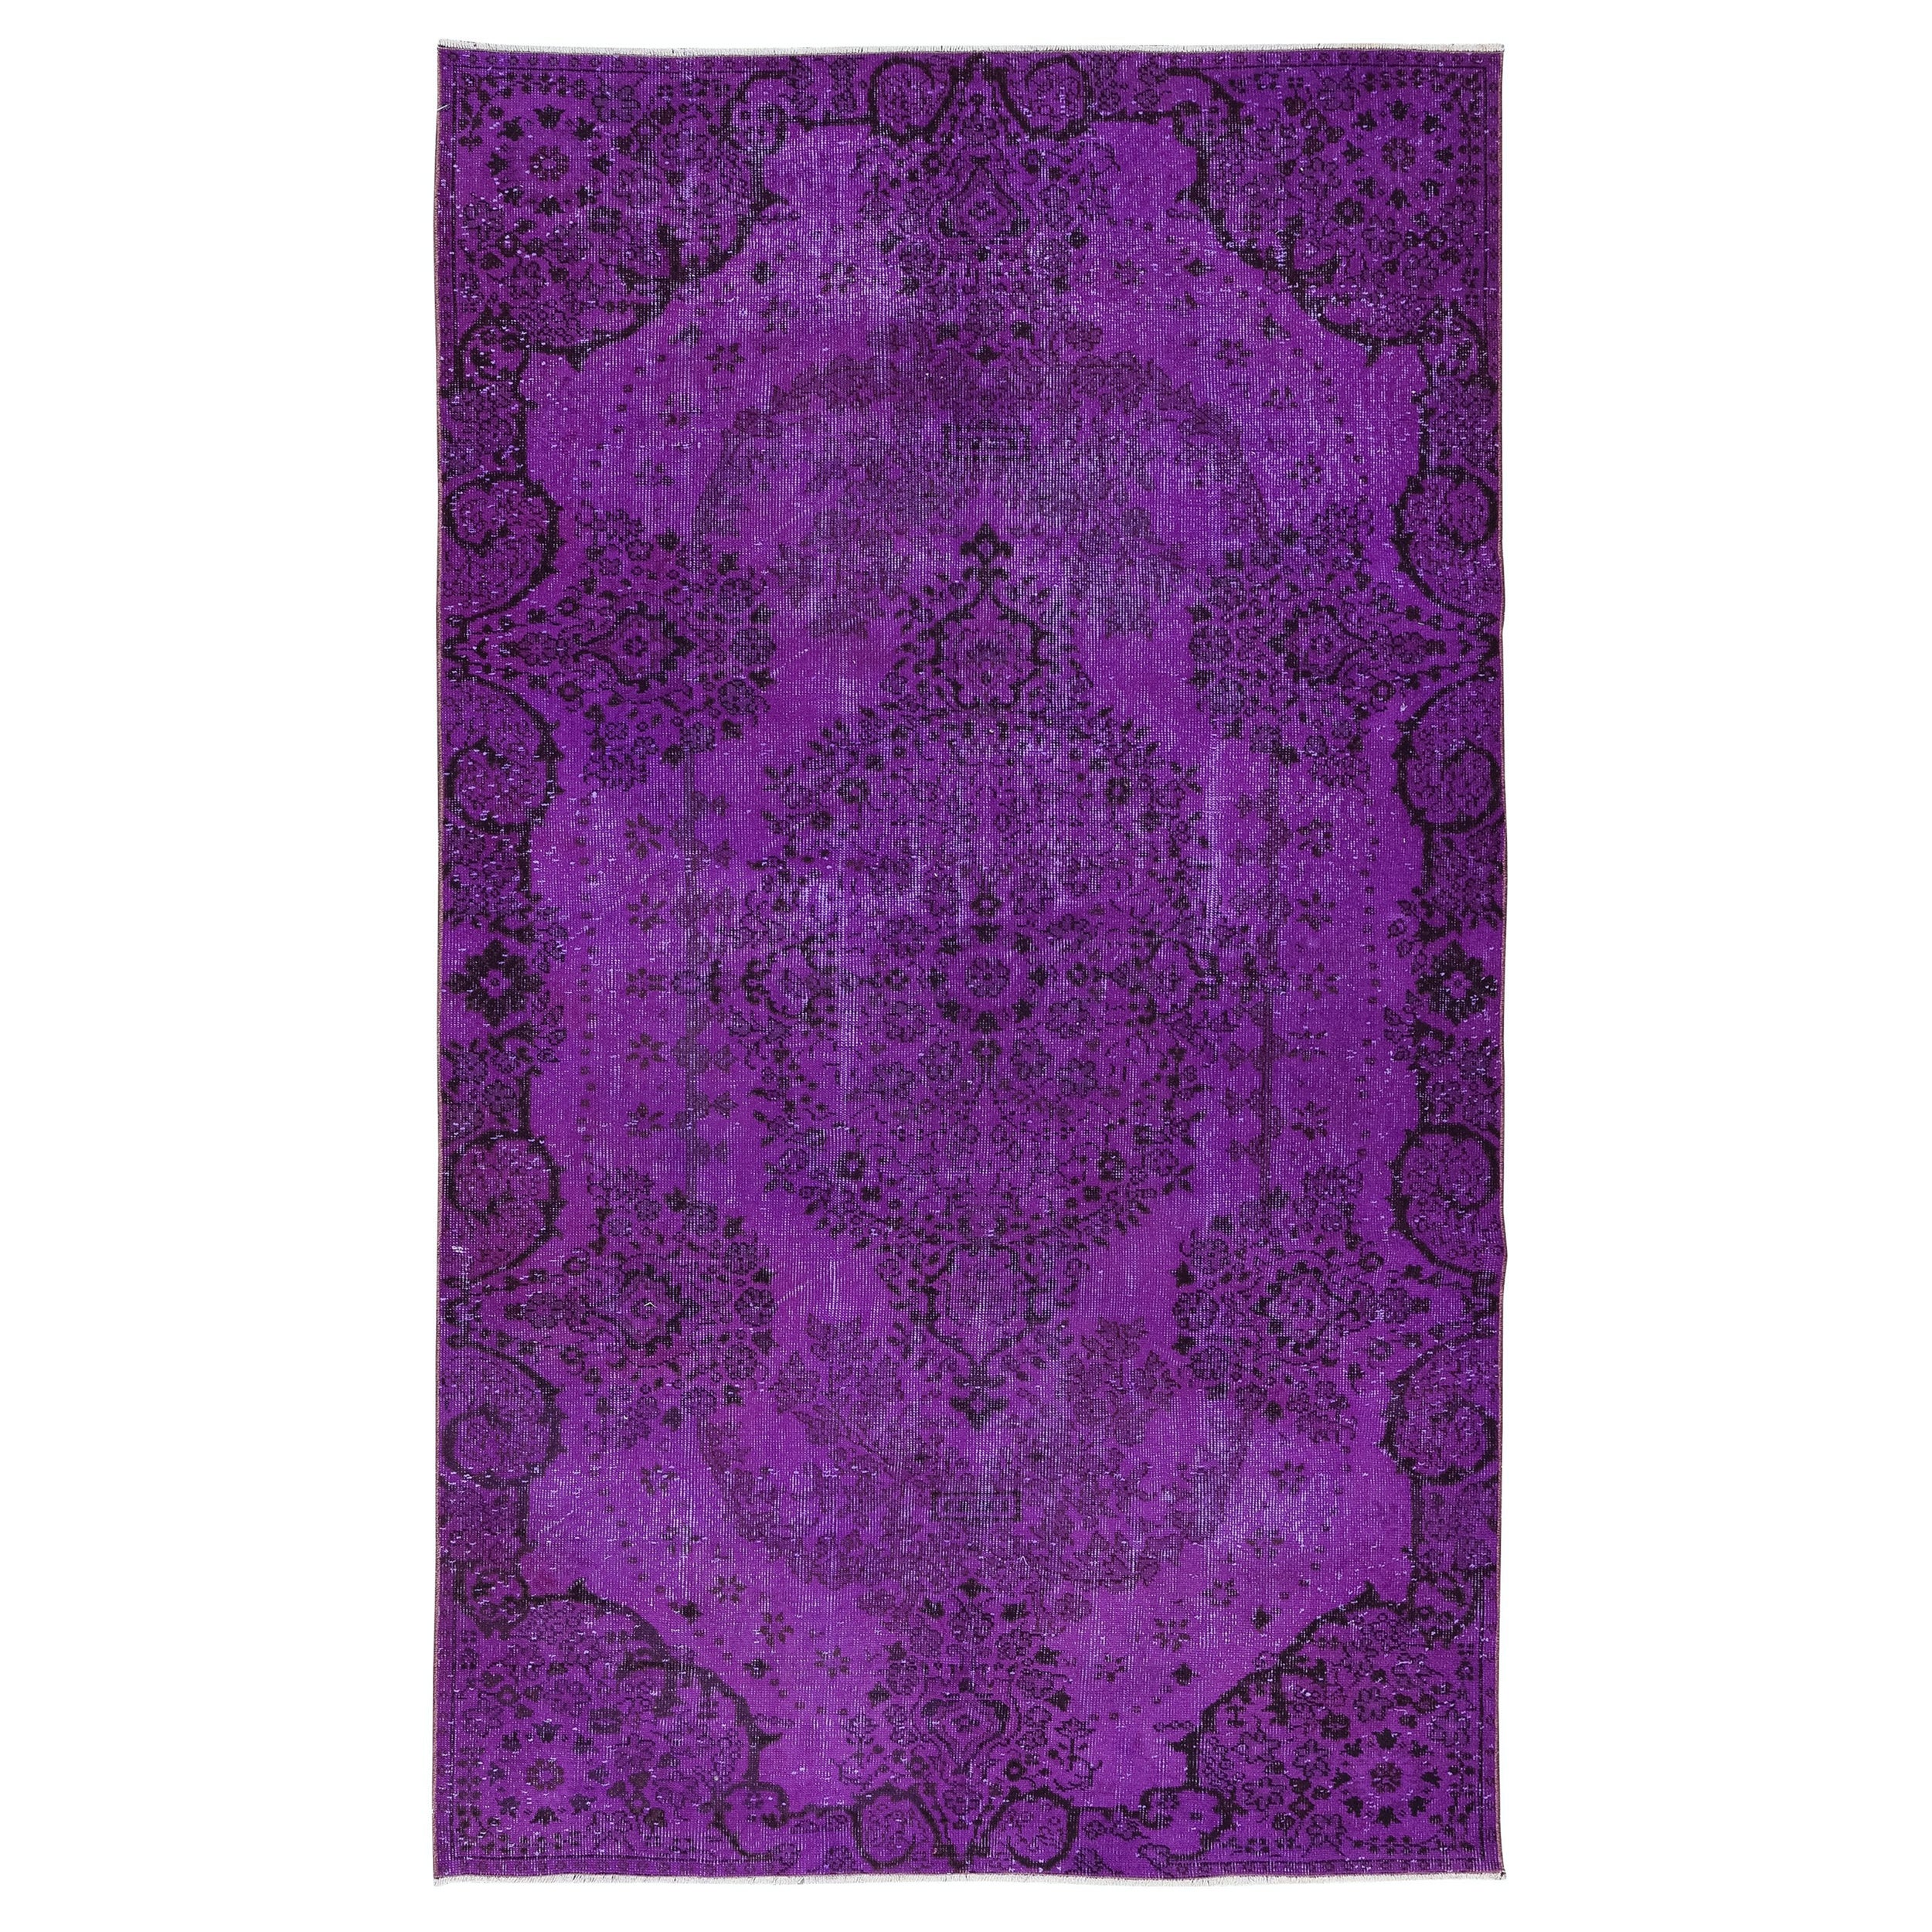 5.7x9.3 Ft Rustic Purple Handmade Room Size Rug, Upcycled Turkish Carpet